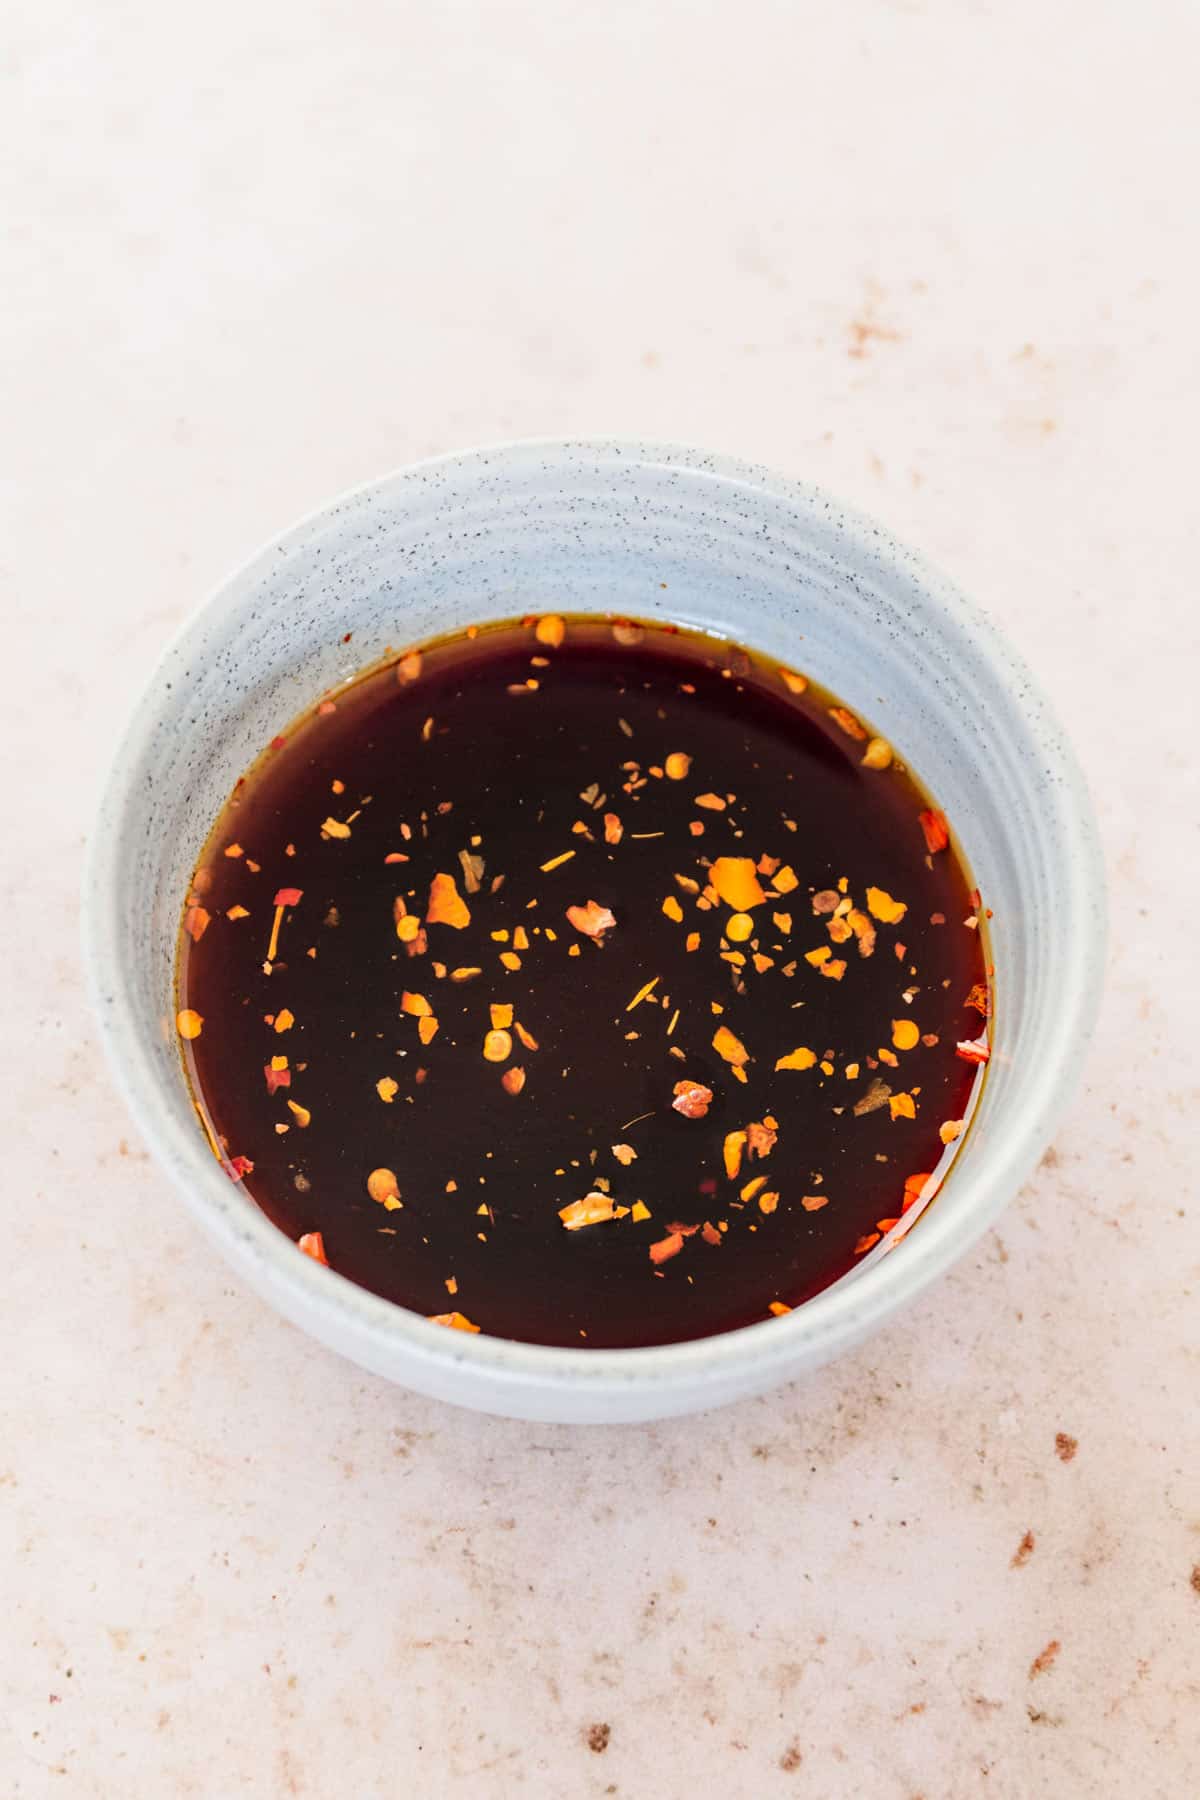 ramen stir fry sauce ingredients in a bowl